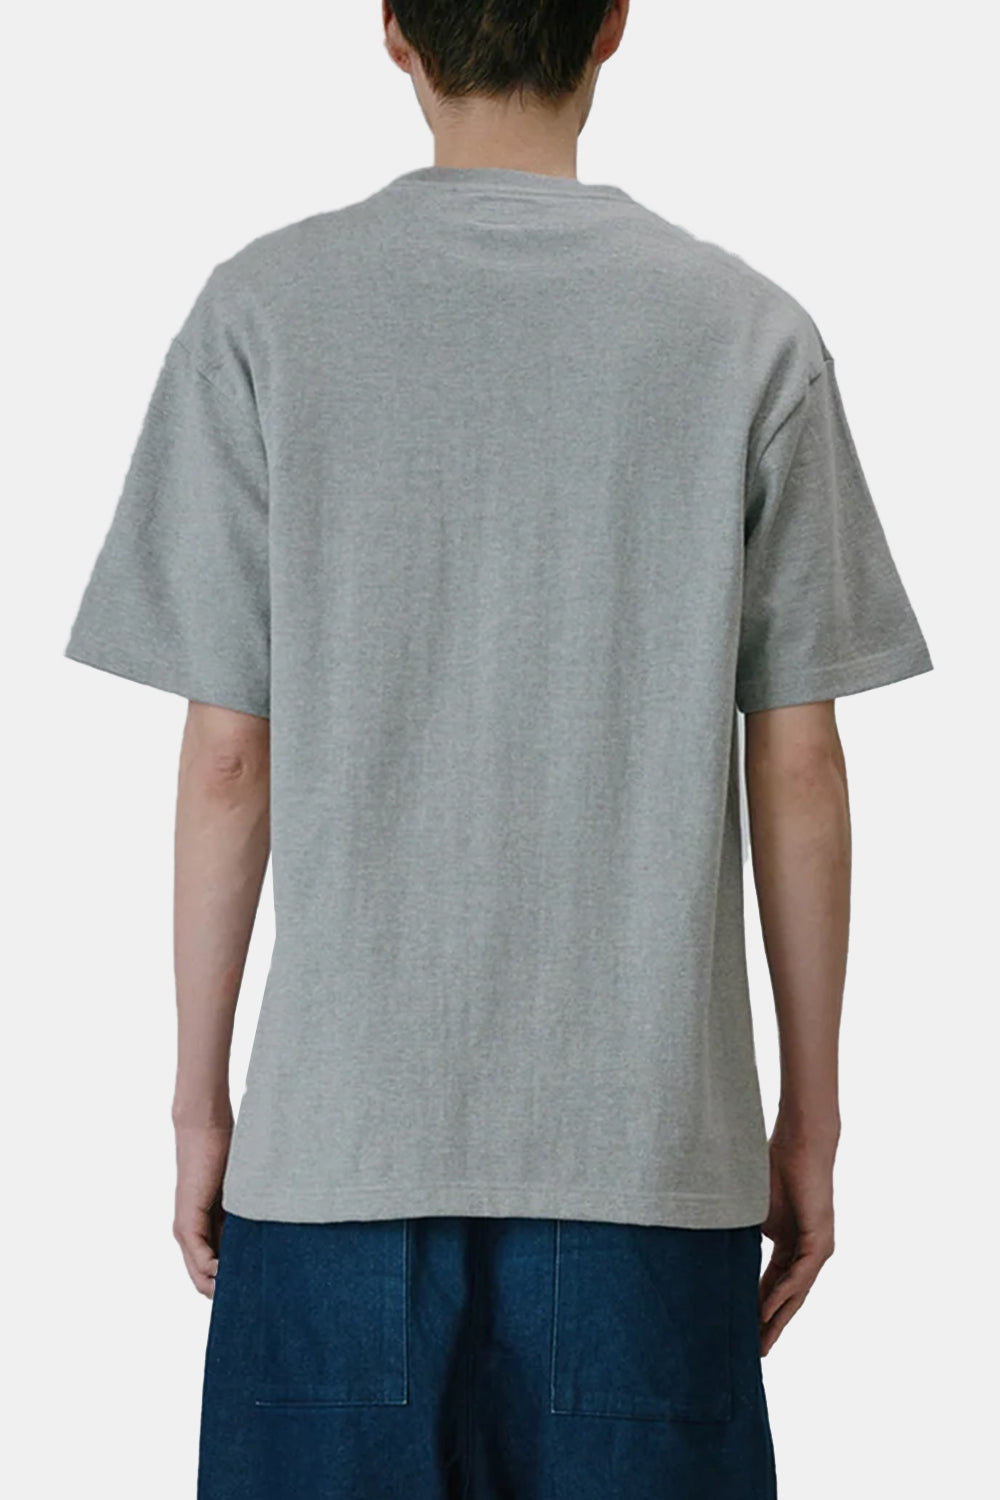 United Athle Japan Made Standard Fit Pocket T-shirt (Grey)